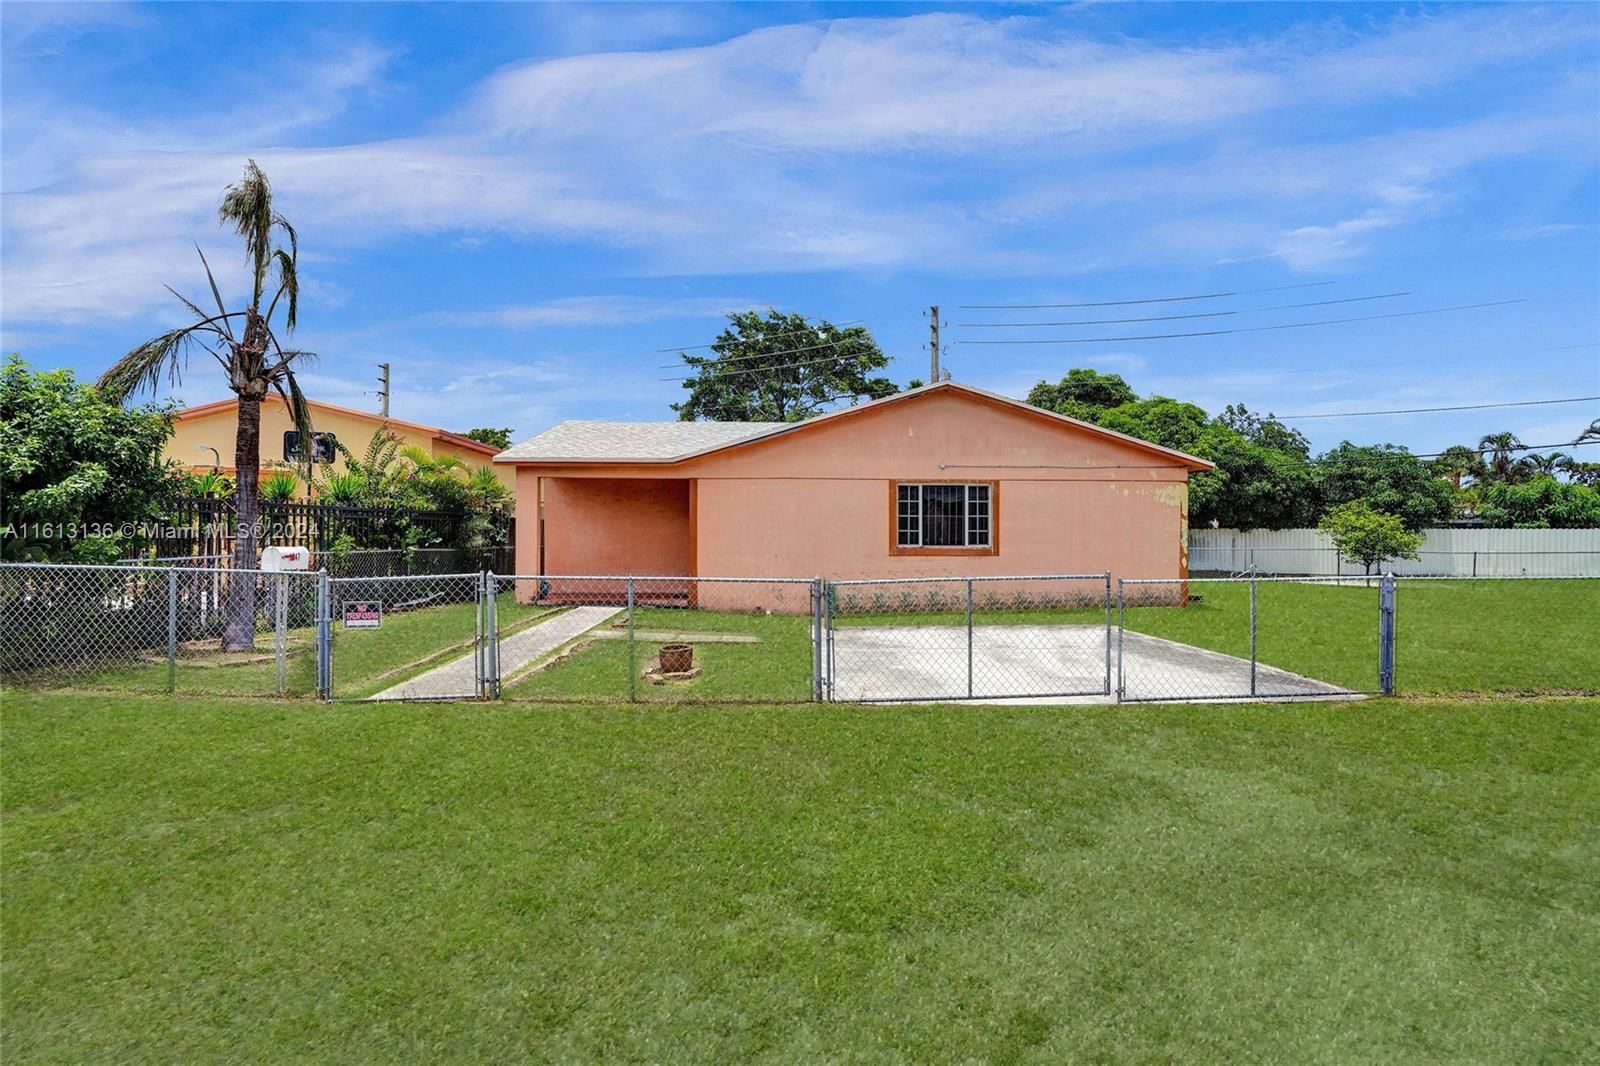 Real estate property located at 1047 Superior St, Miami-Dade County, OPA LOCKA PL NO 3, Opa-Locka, FL